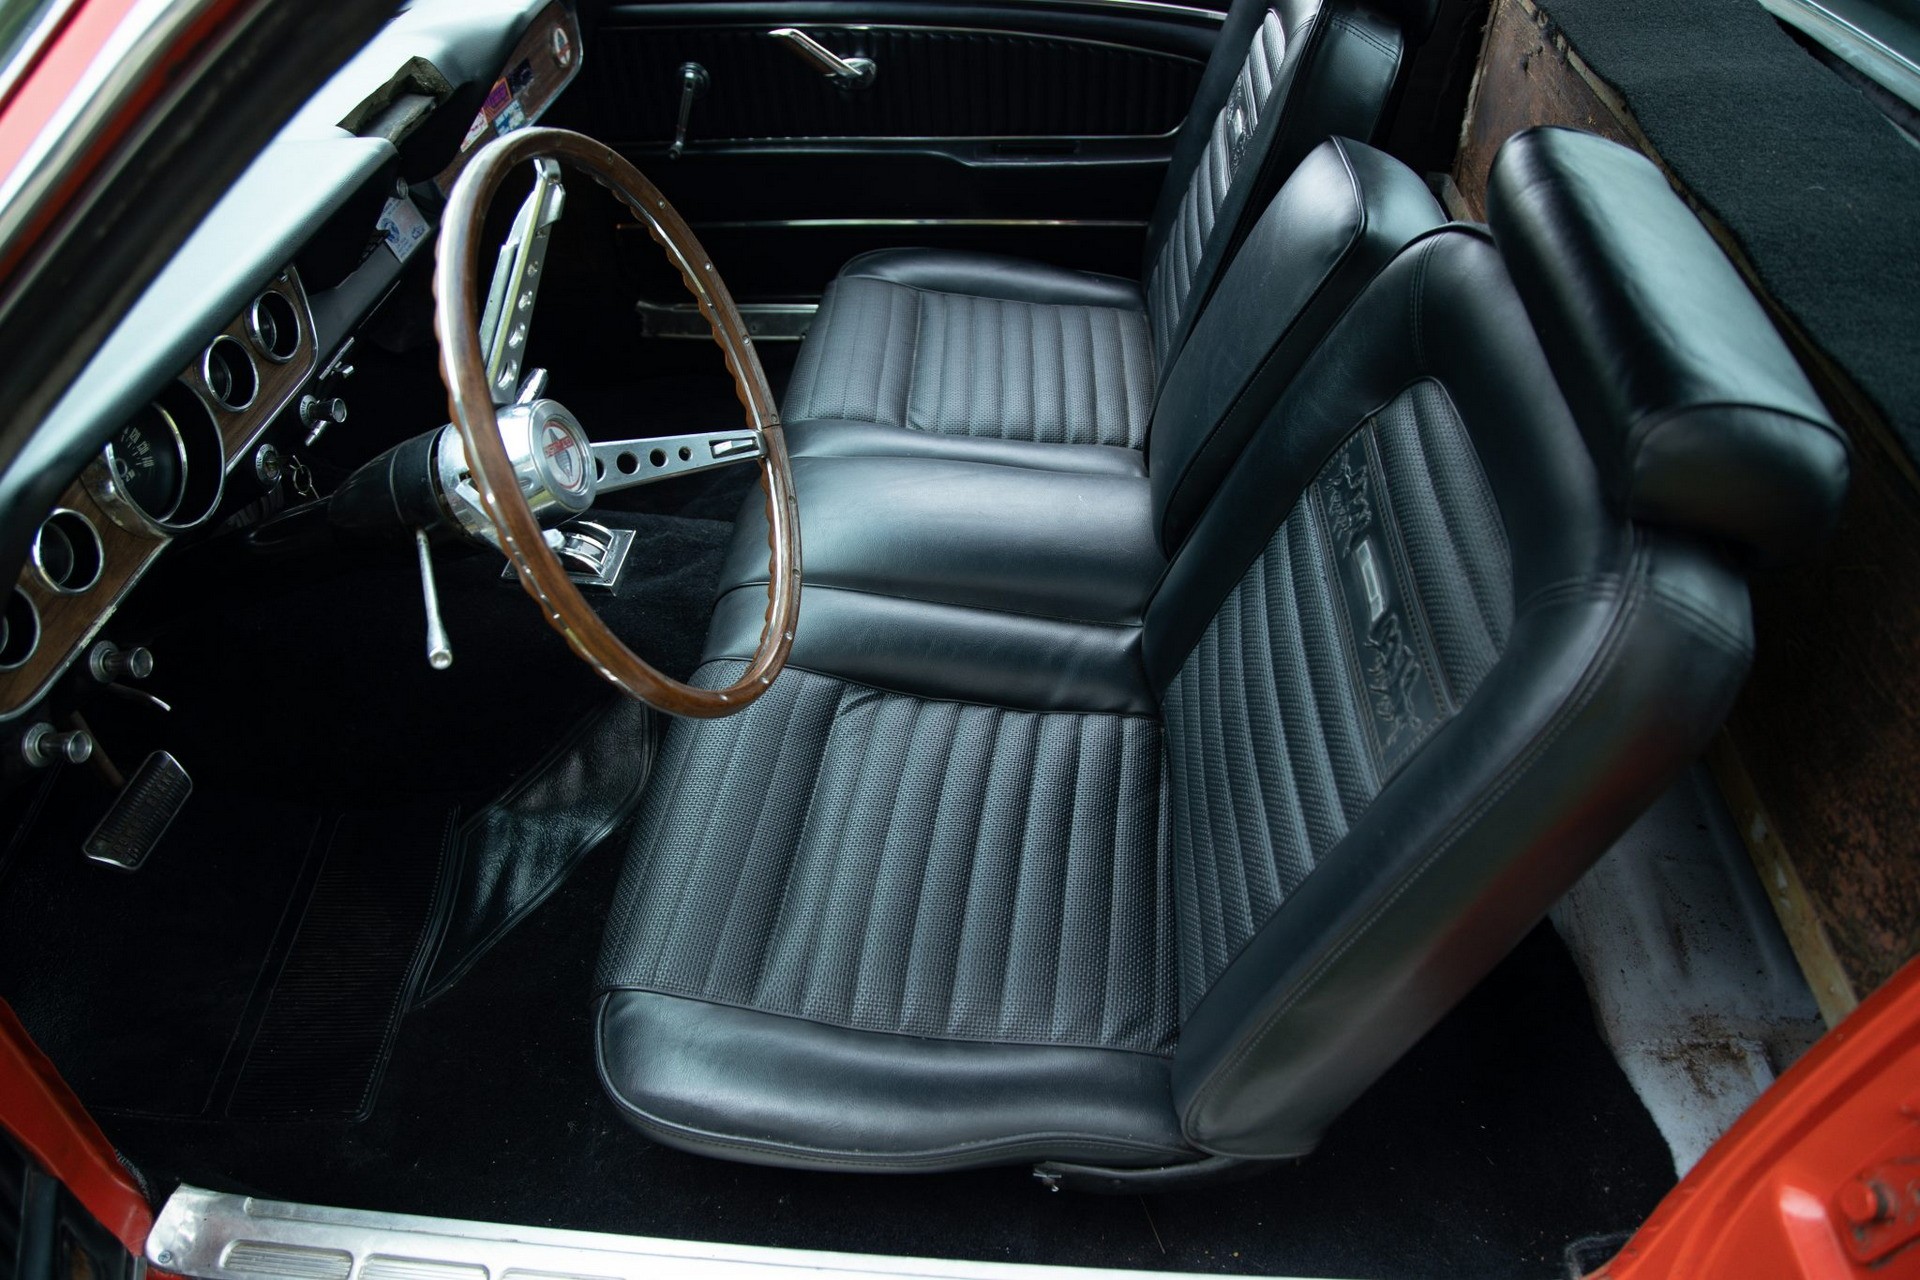 Пикап Ford Mustang 1966 года выпуска как рабочая лошадка